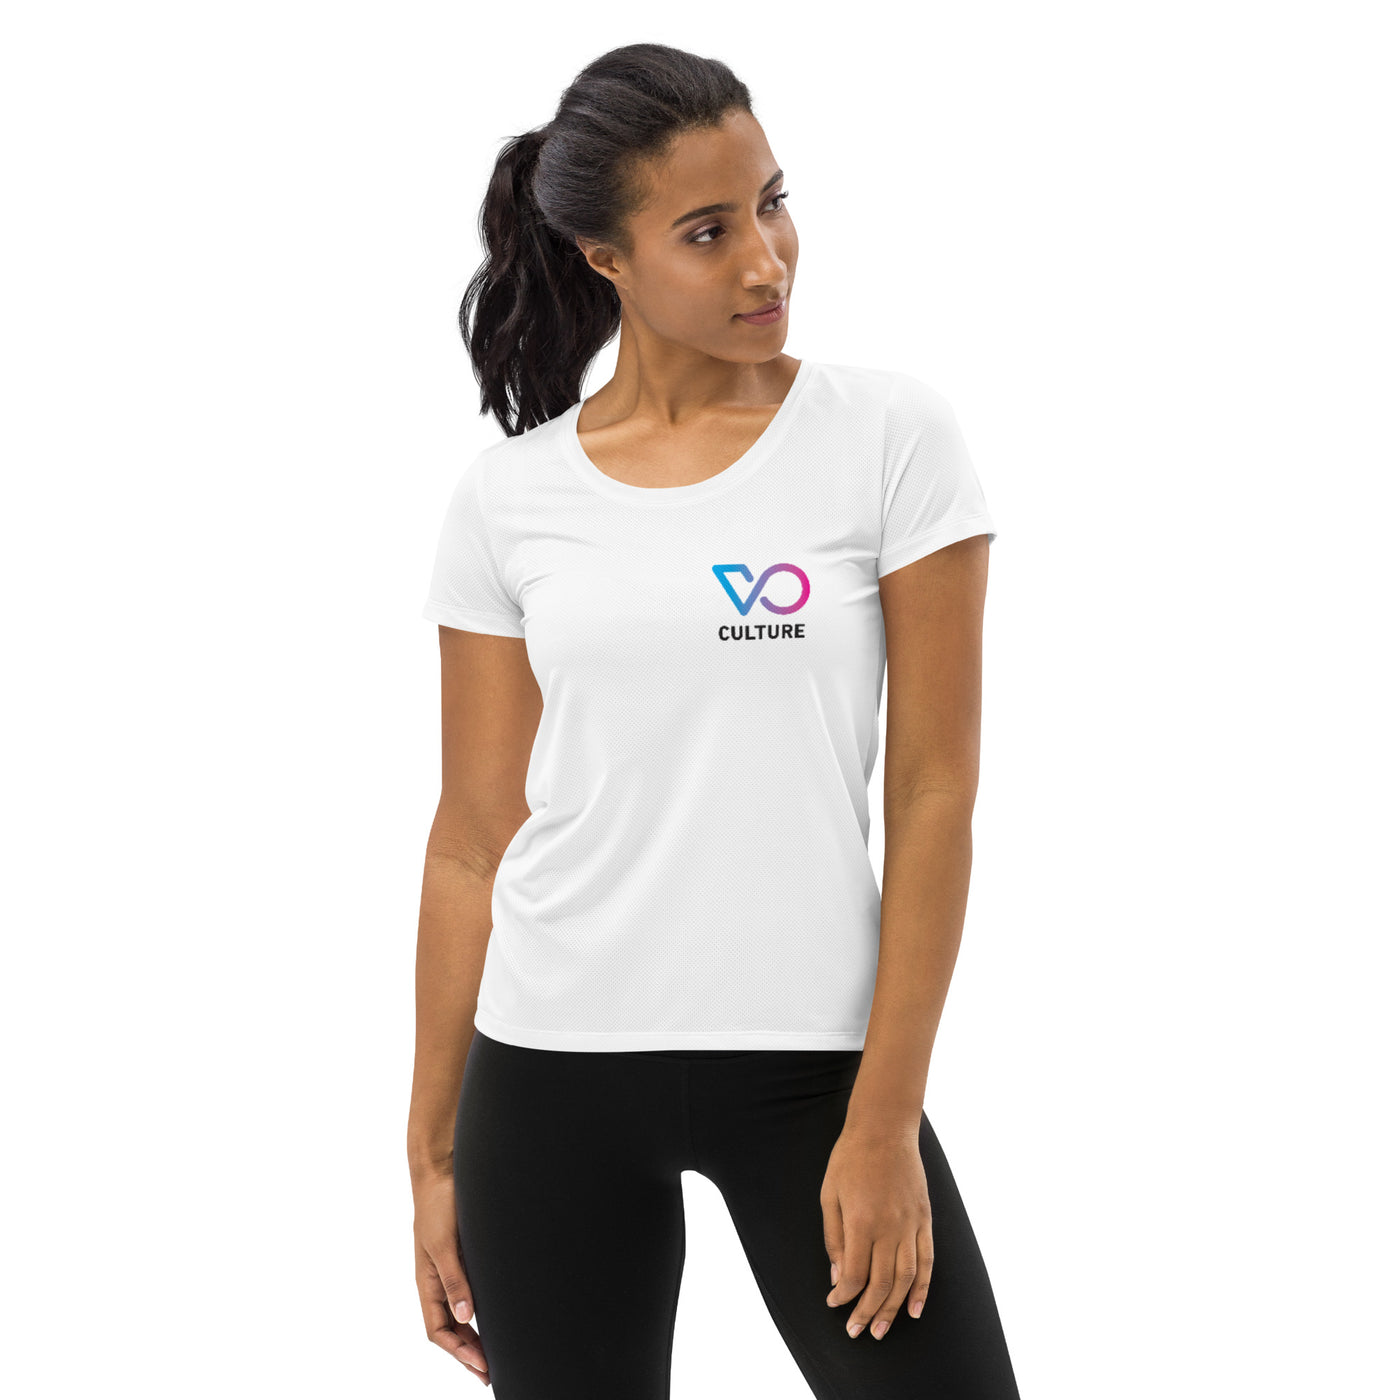 VOICE ACTOR Women's Athletic T-shirt